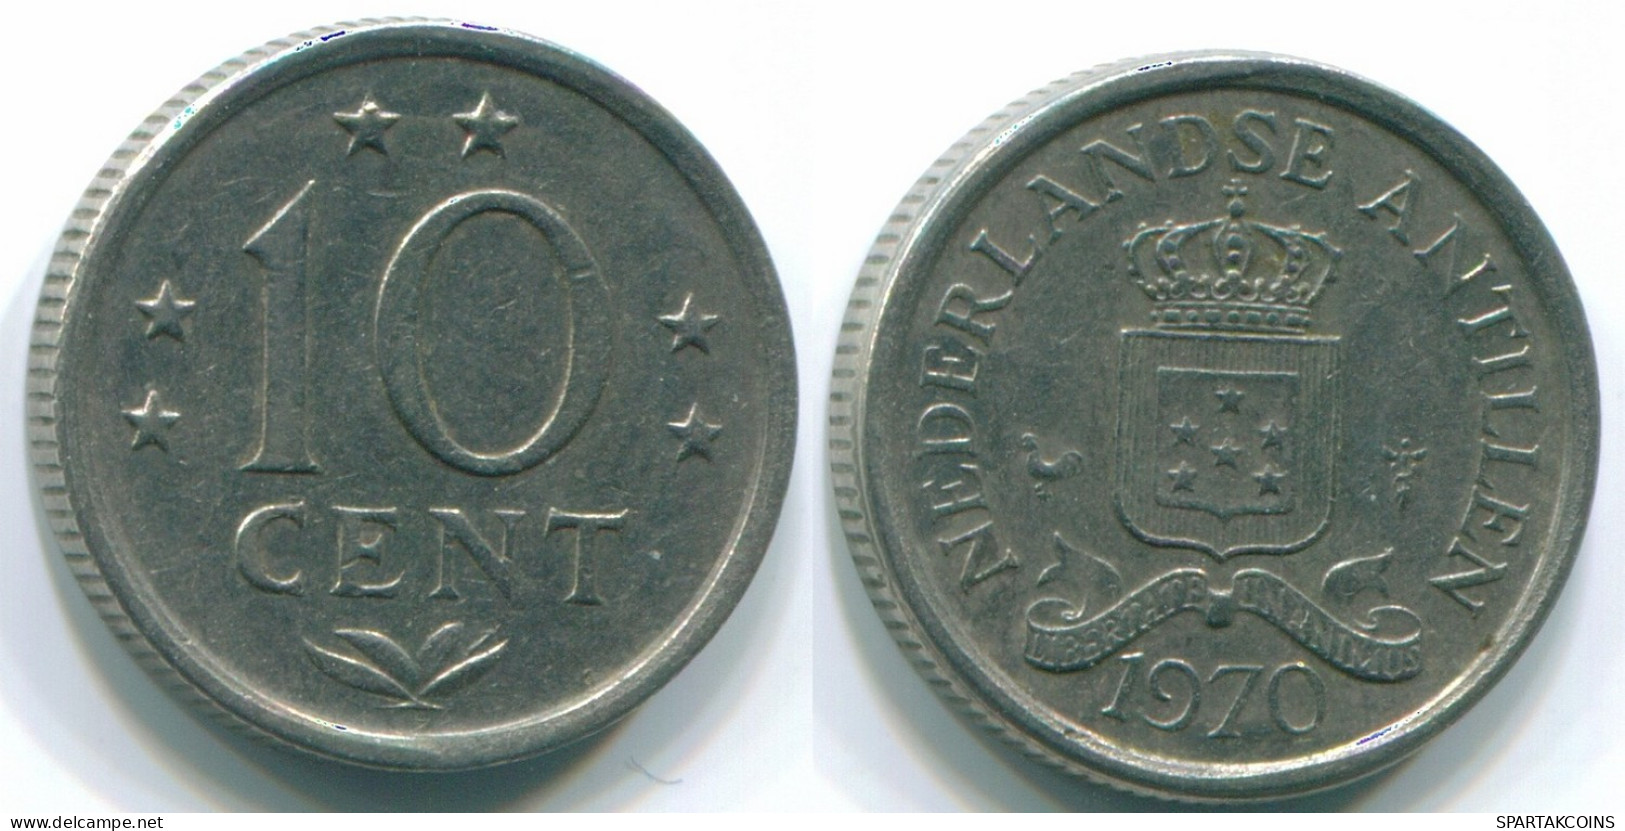 10 CENTS 1970 NIEDERLÄNDISCHE ANTILLEN Nickel Koloniale Münze #S13350.D.A - Netherlands Antilles